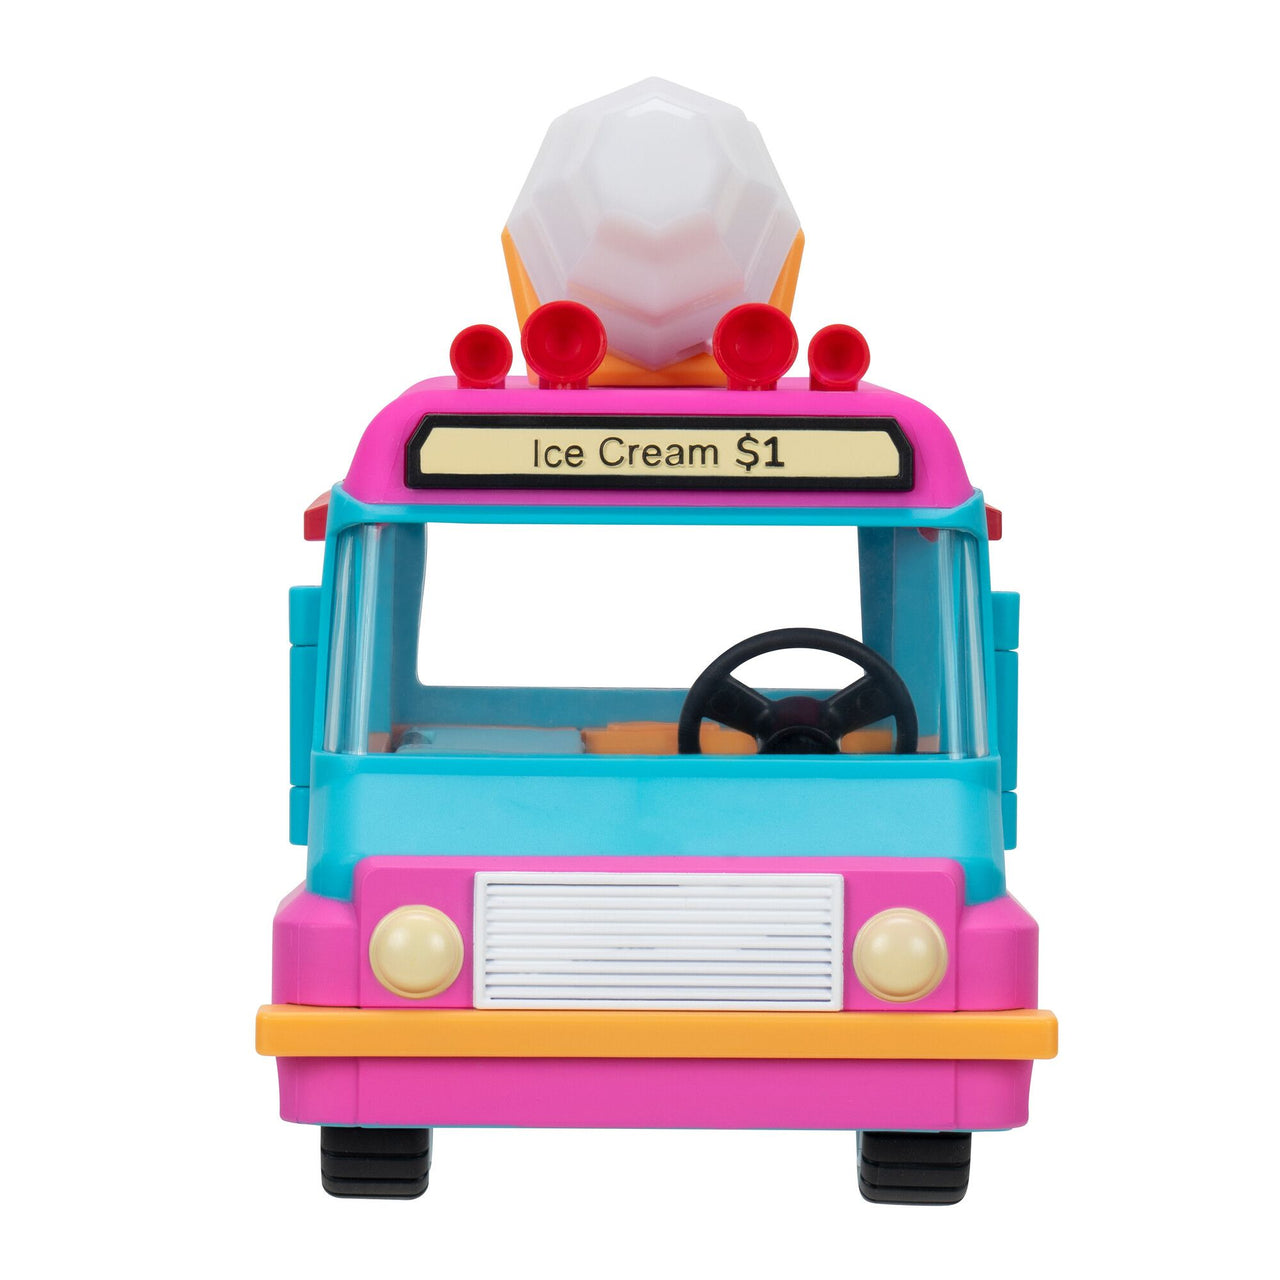 Adopt Me - Ice Cream Truck Feature Vehicle Adopt Me